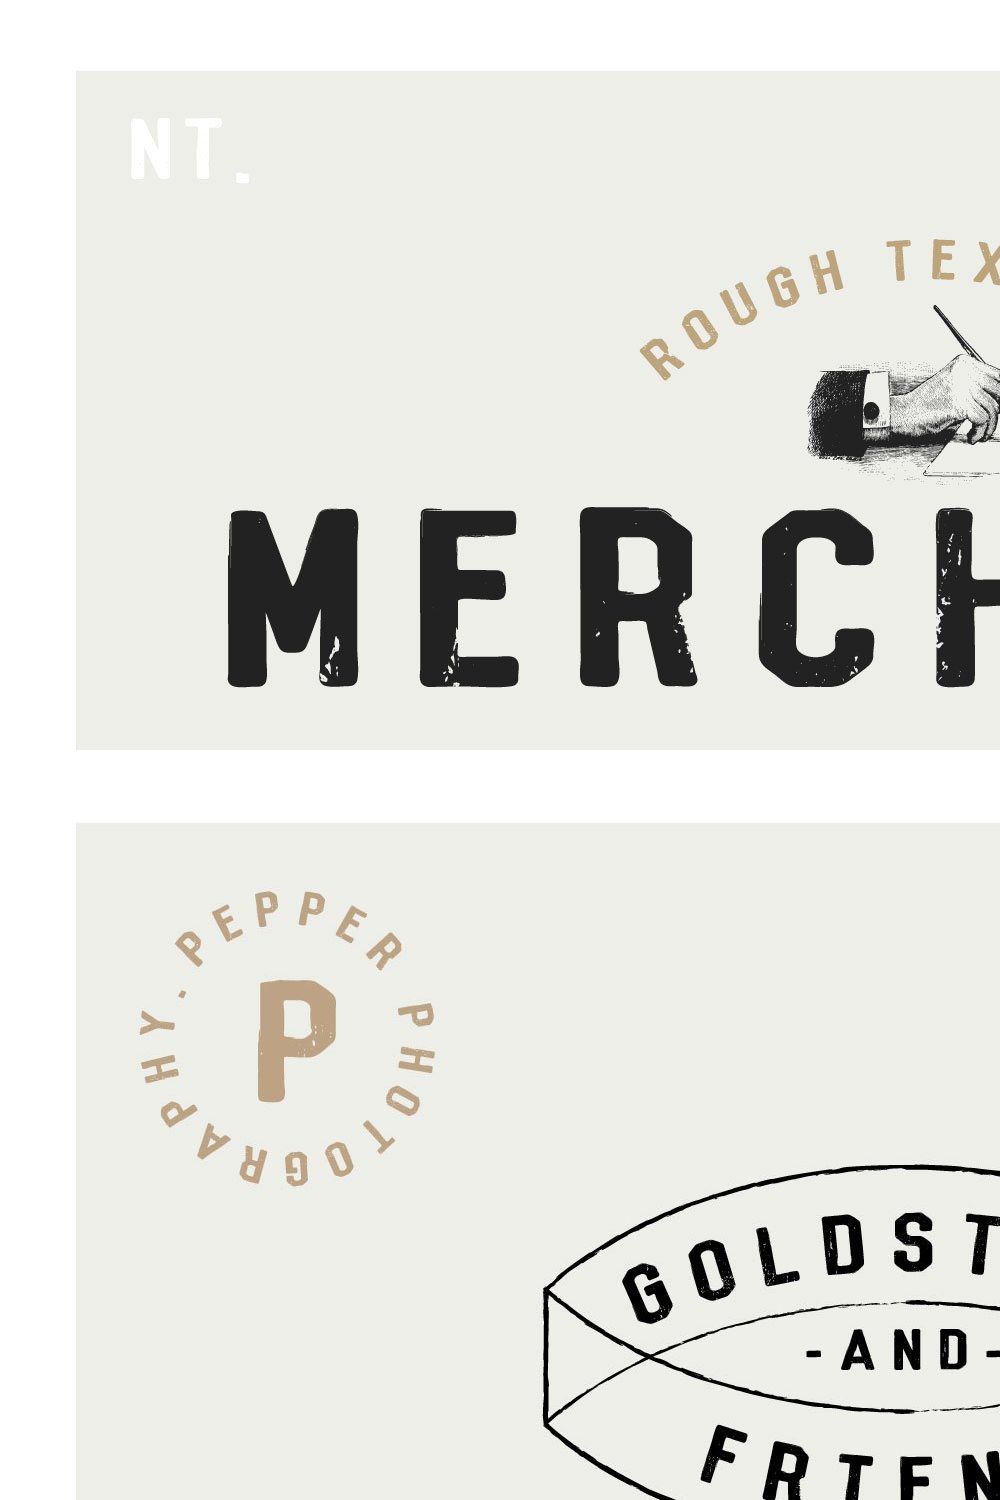 Merchant - Vintage Dry Brush Font pinterest preview image.